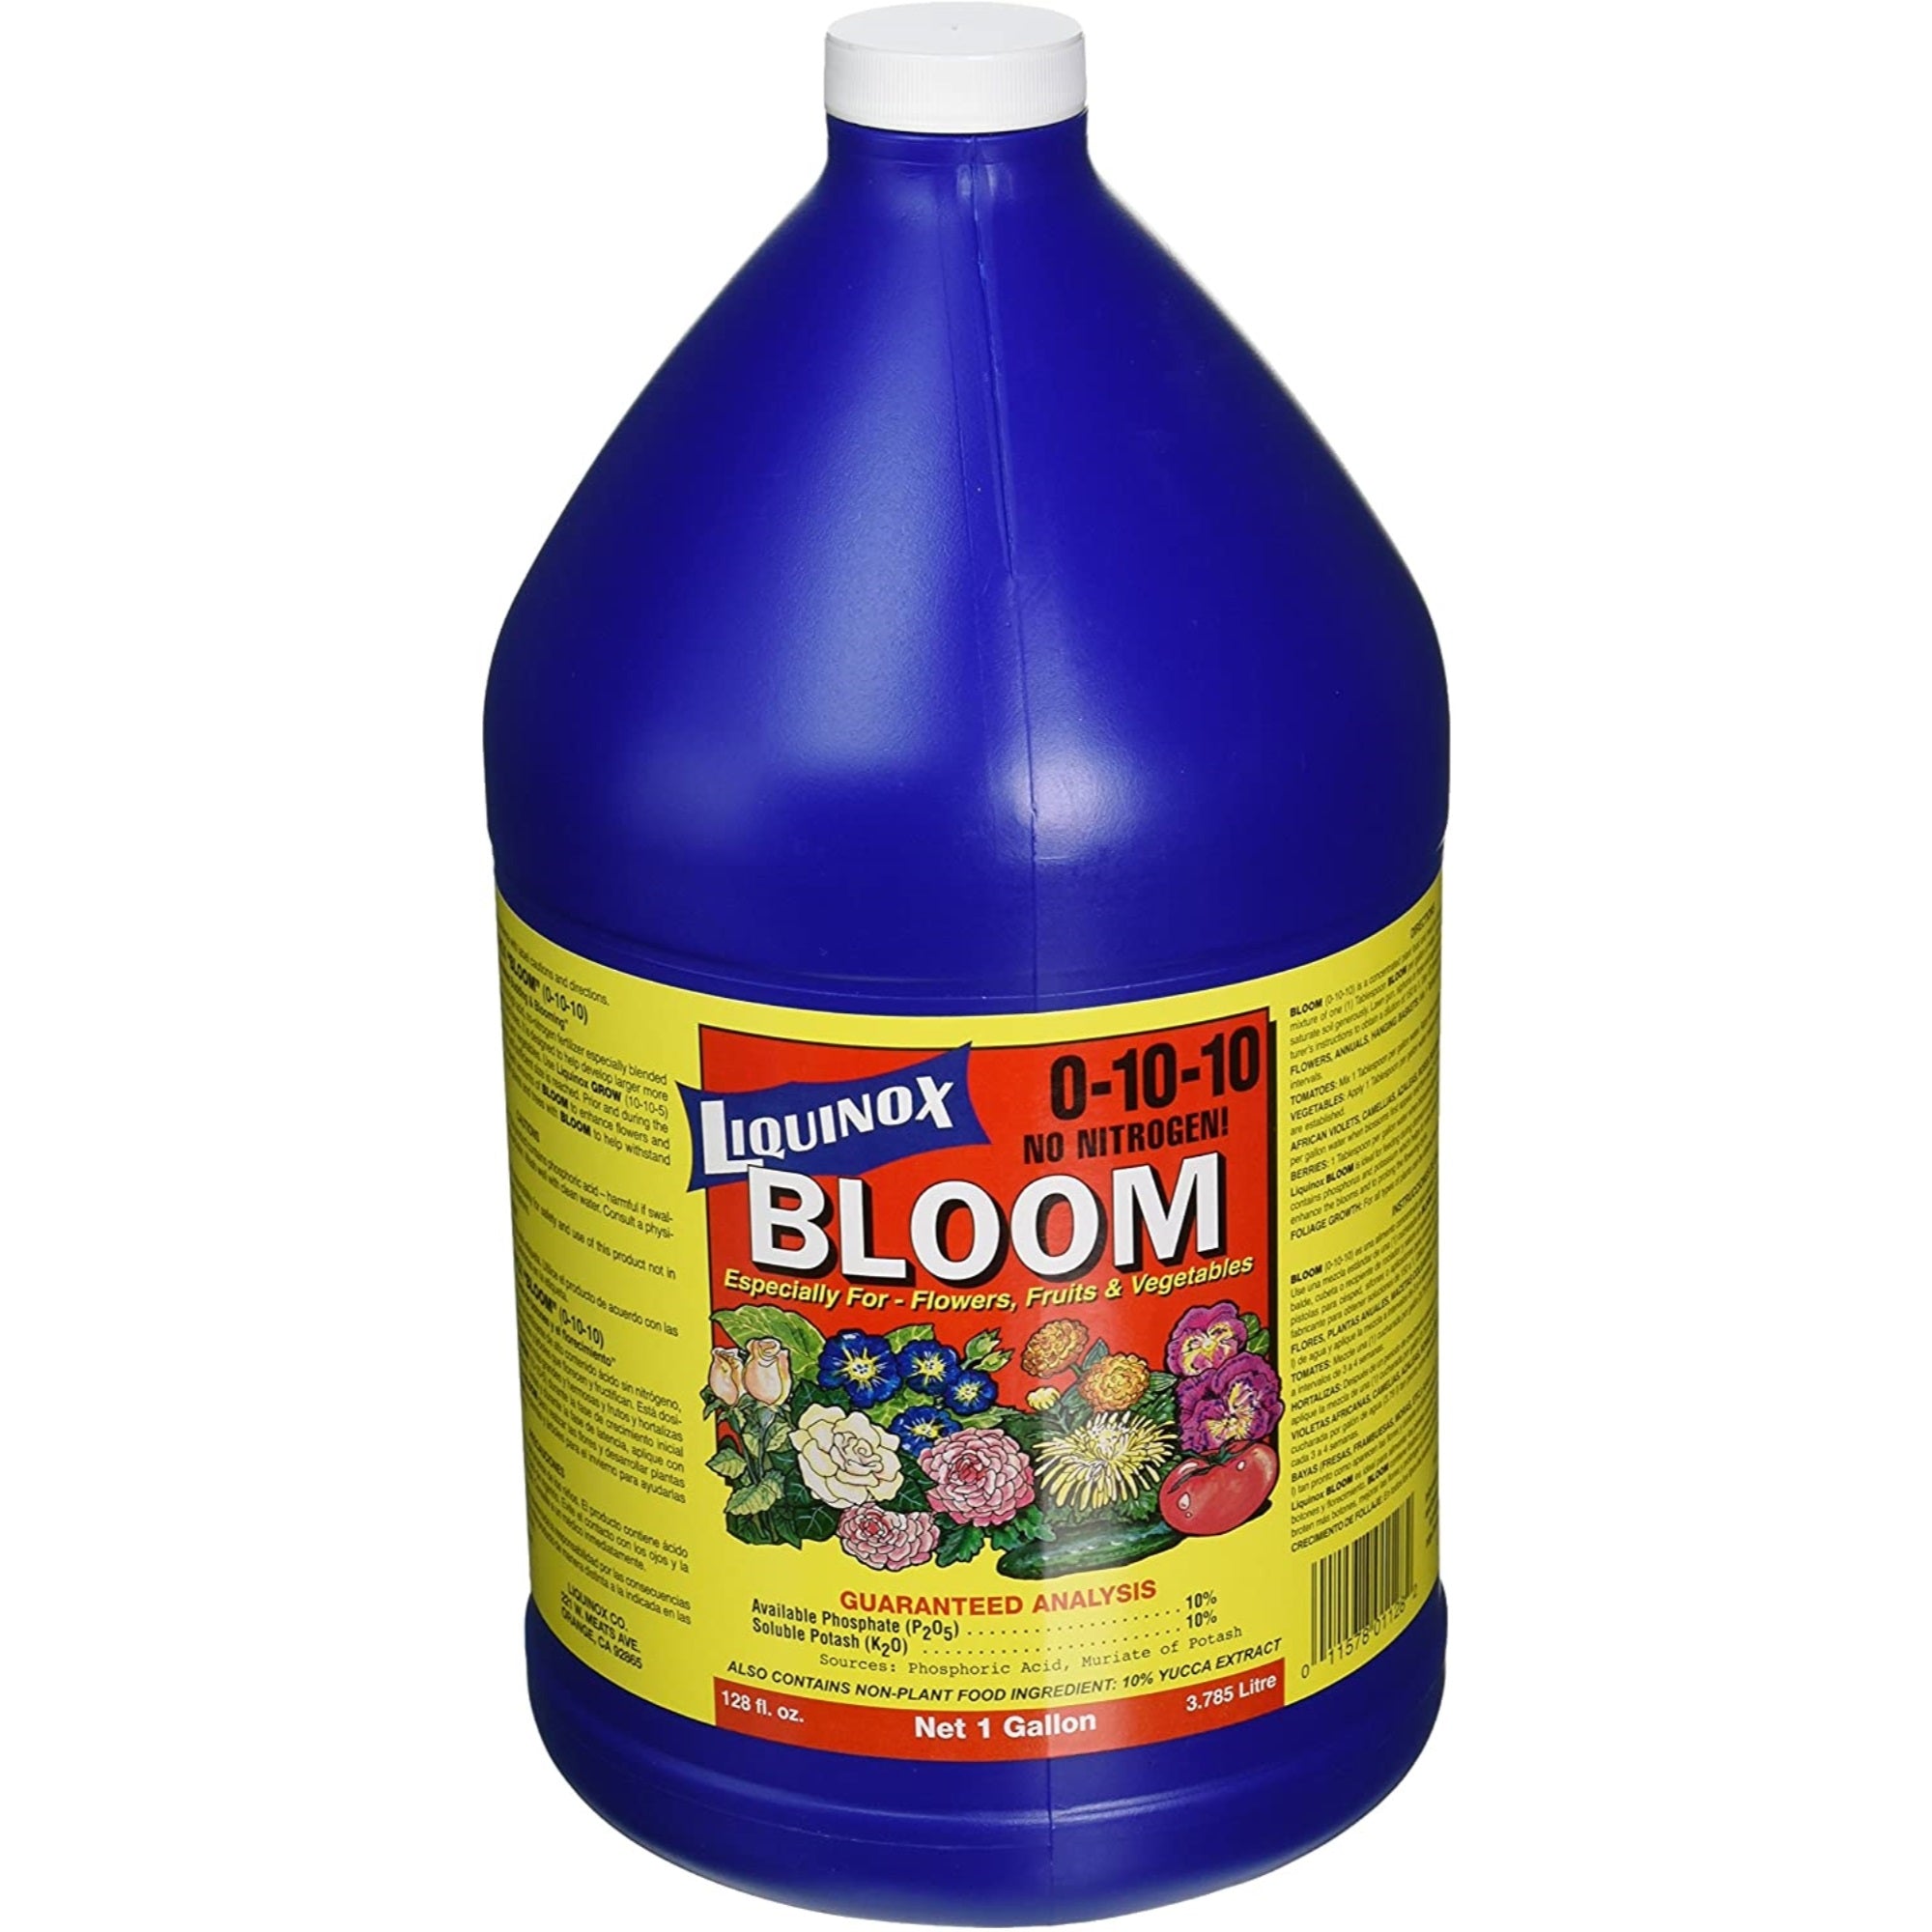 Liquinox 0-10-10 Flower Bloom Liquid RTU Fertilizer, 1 Gallon Bottle